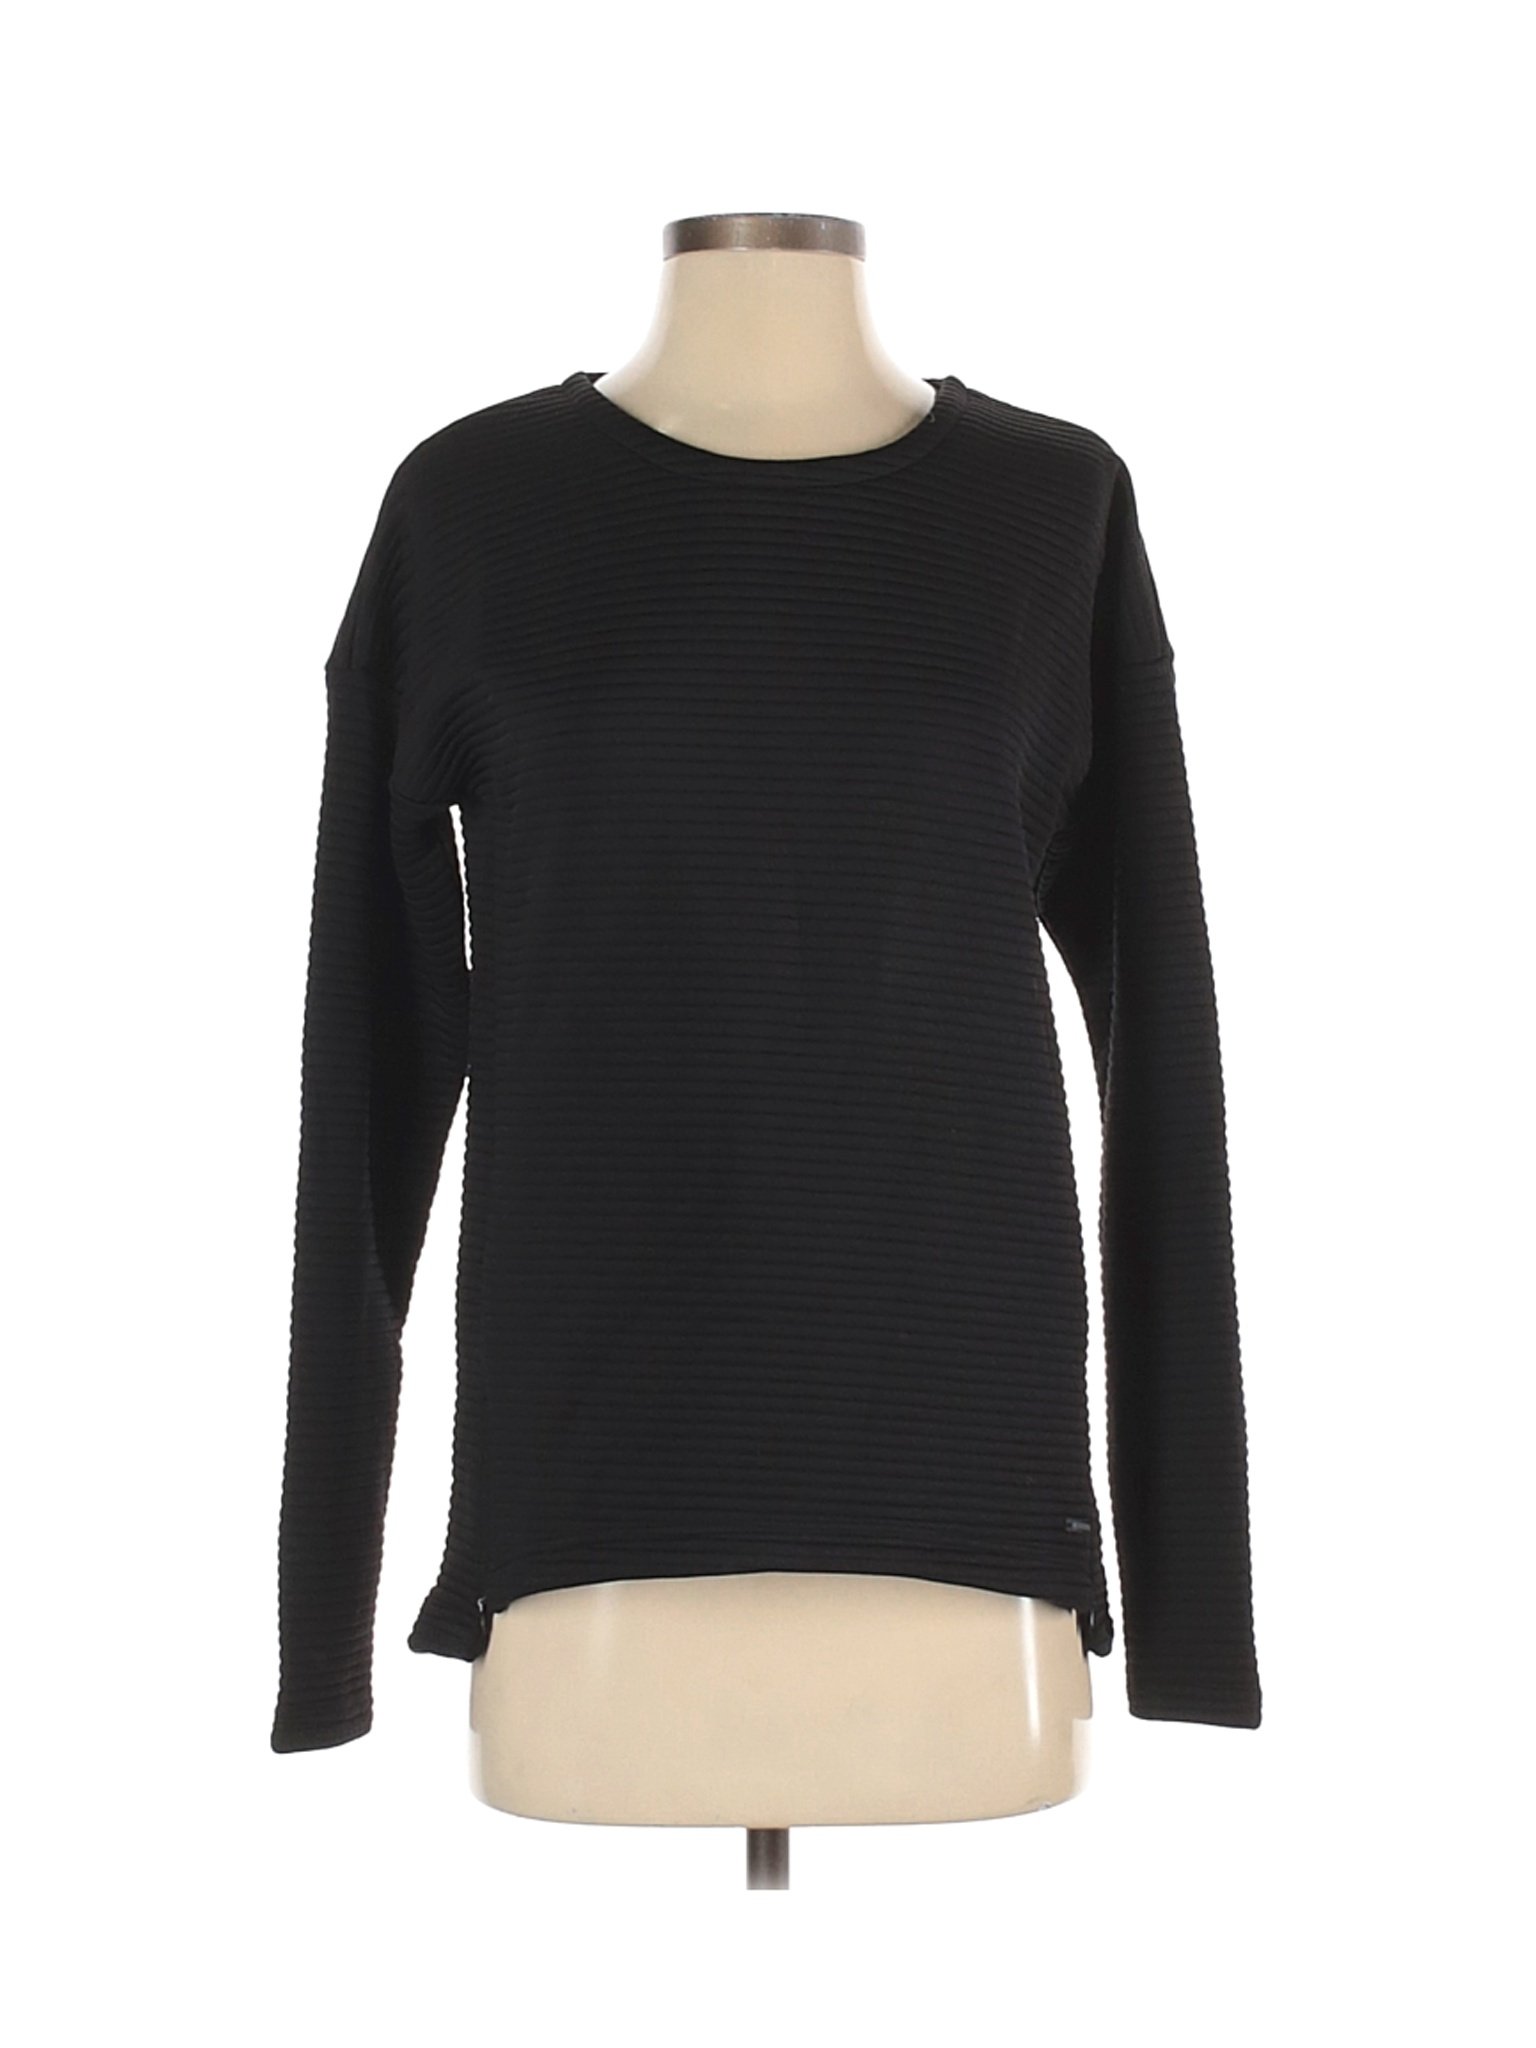 Mondetta Women Black Pullover Sweater S | eBay